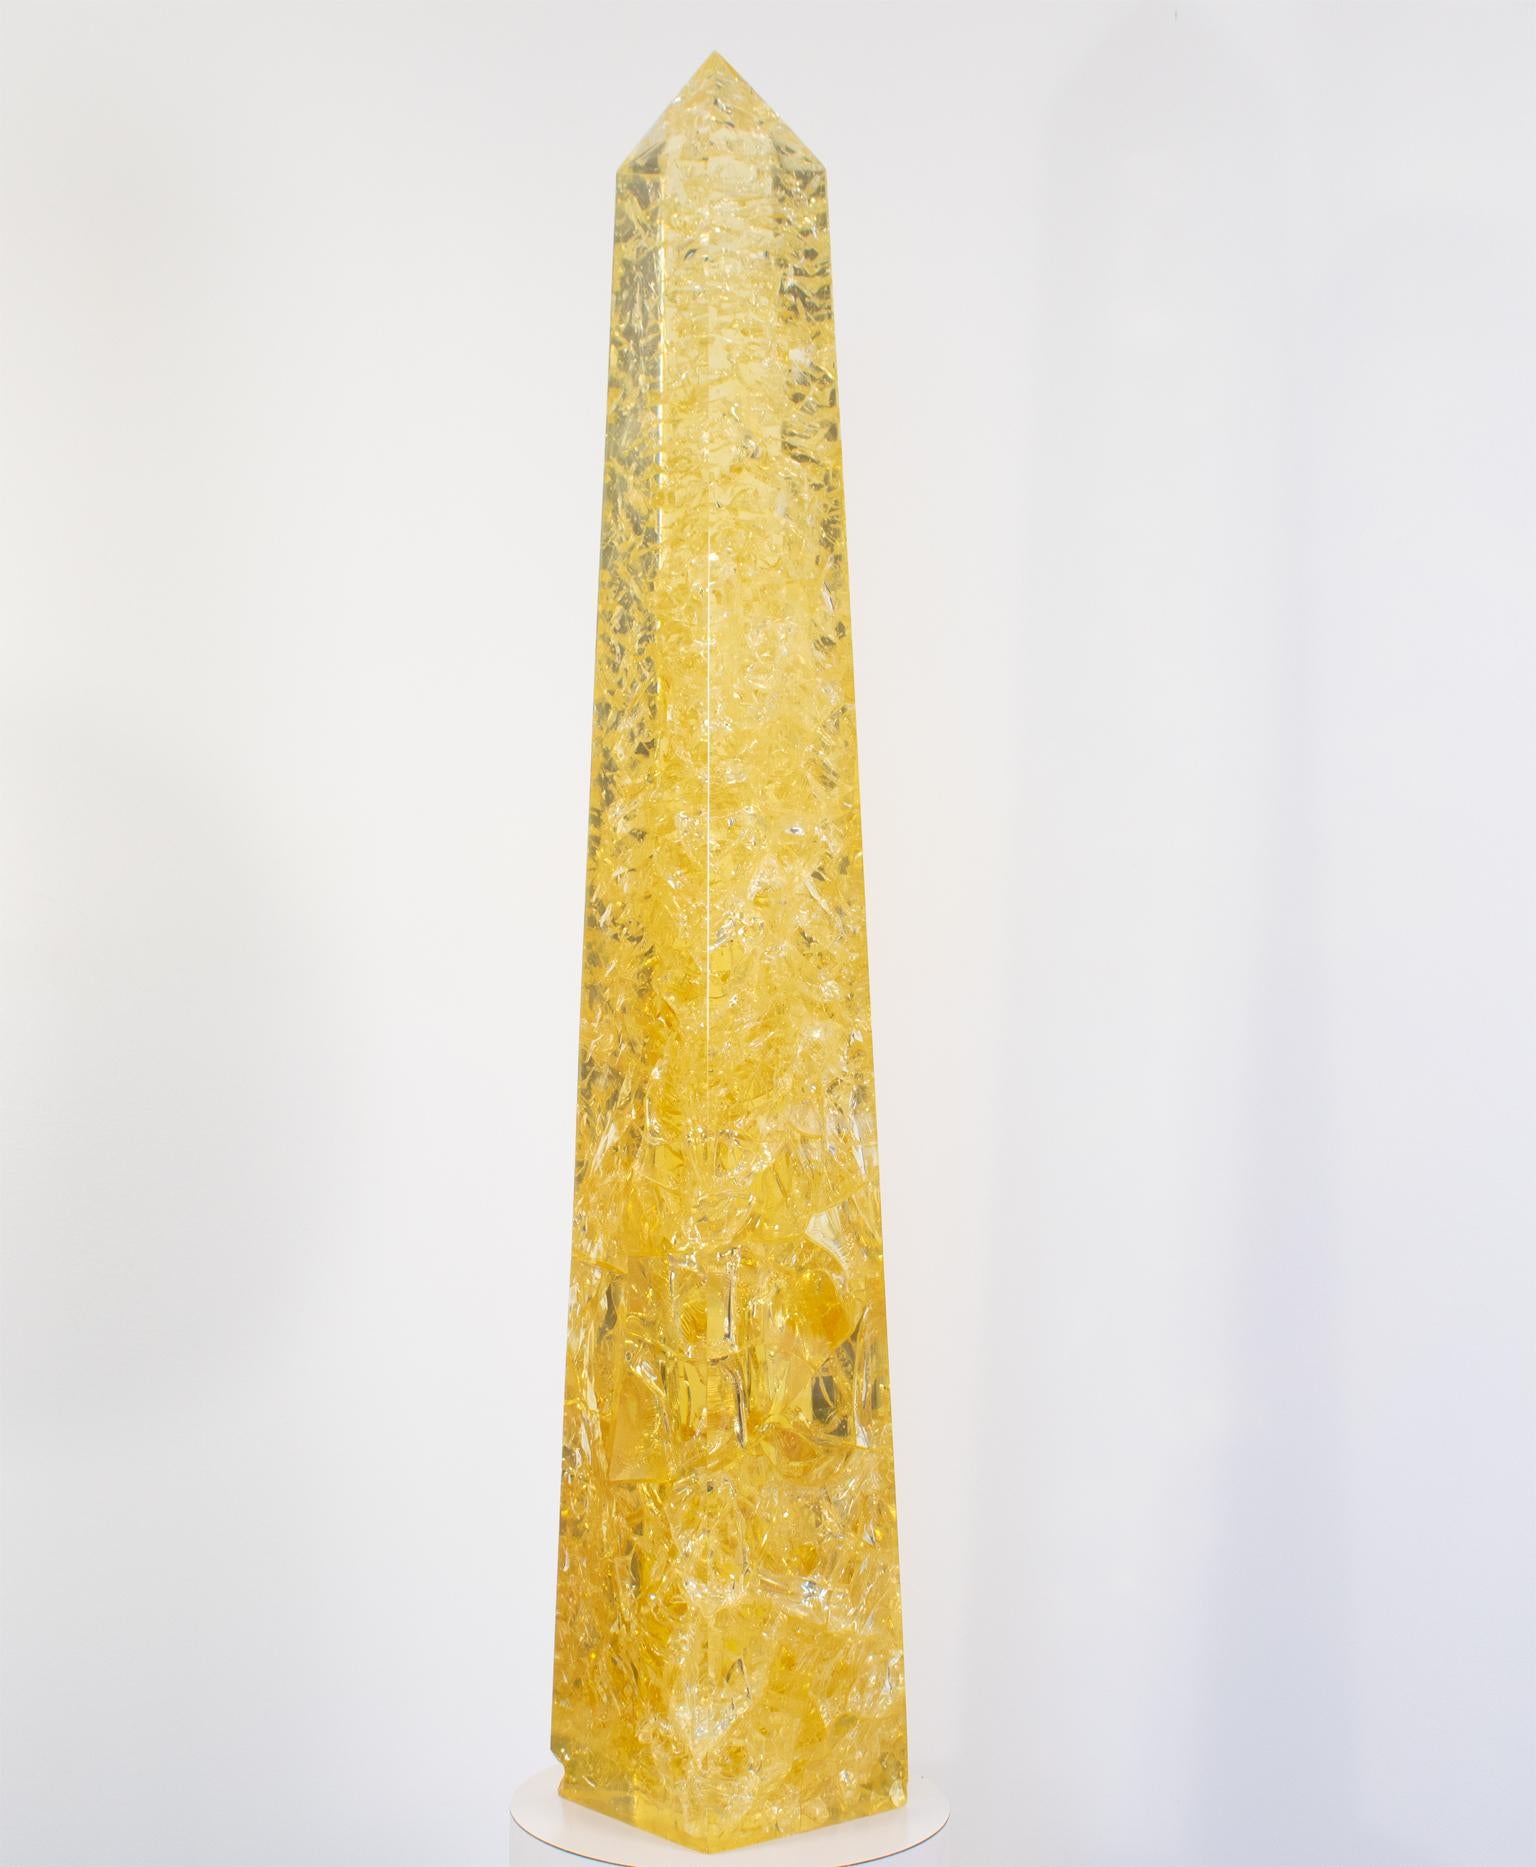 Oversized Yellow Fractal Resin Obelisk by Pierre Giraudon, 1970s For Sale 4